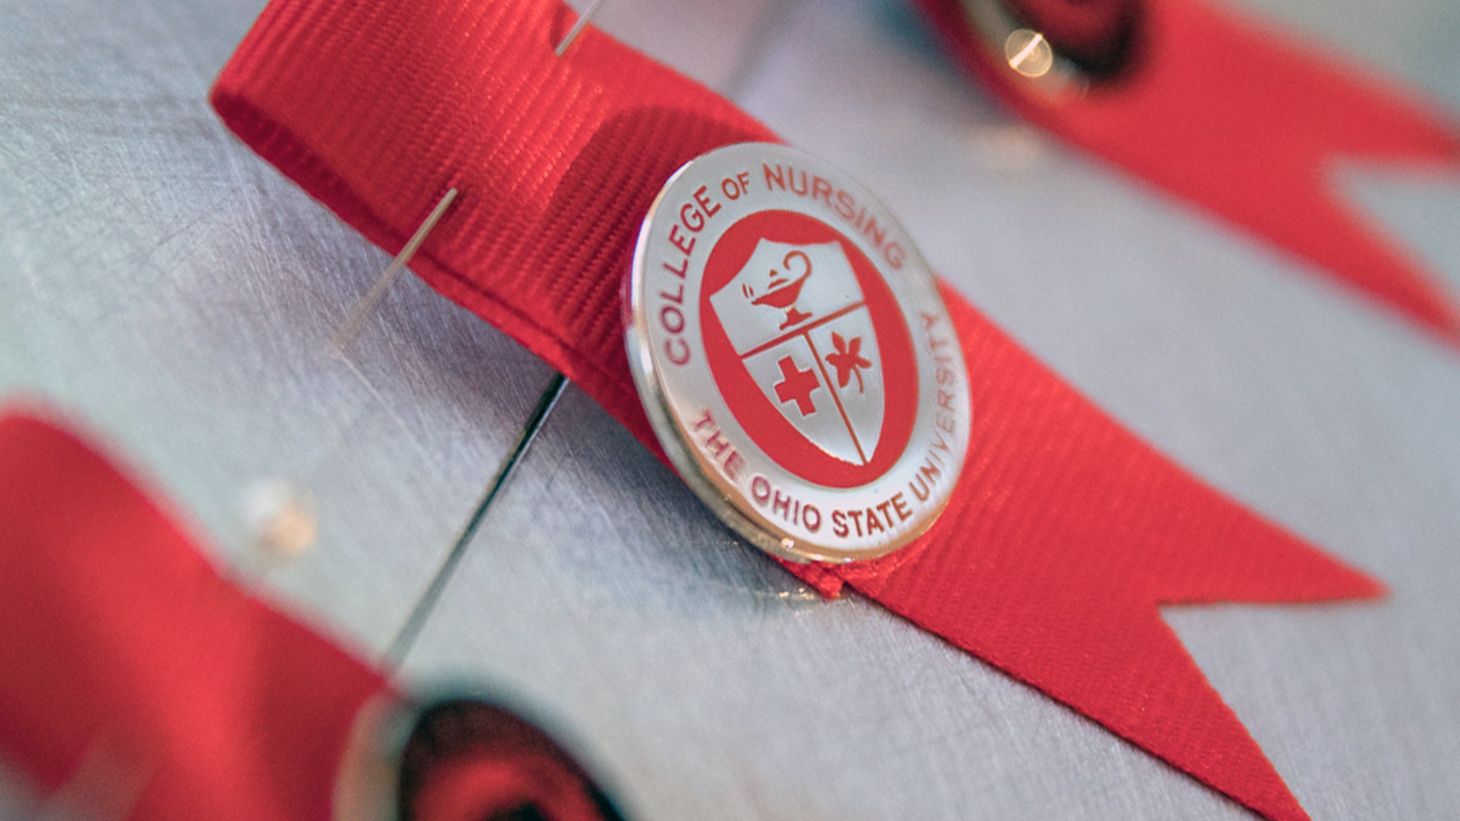 The Ohio State University College of Nursing nursing pin